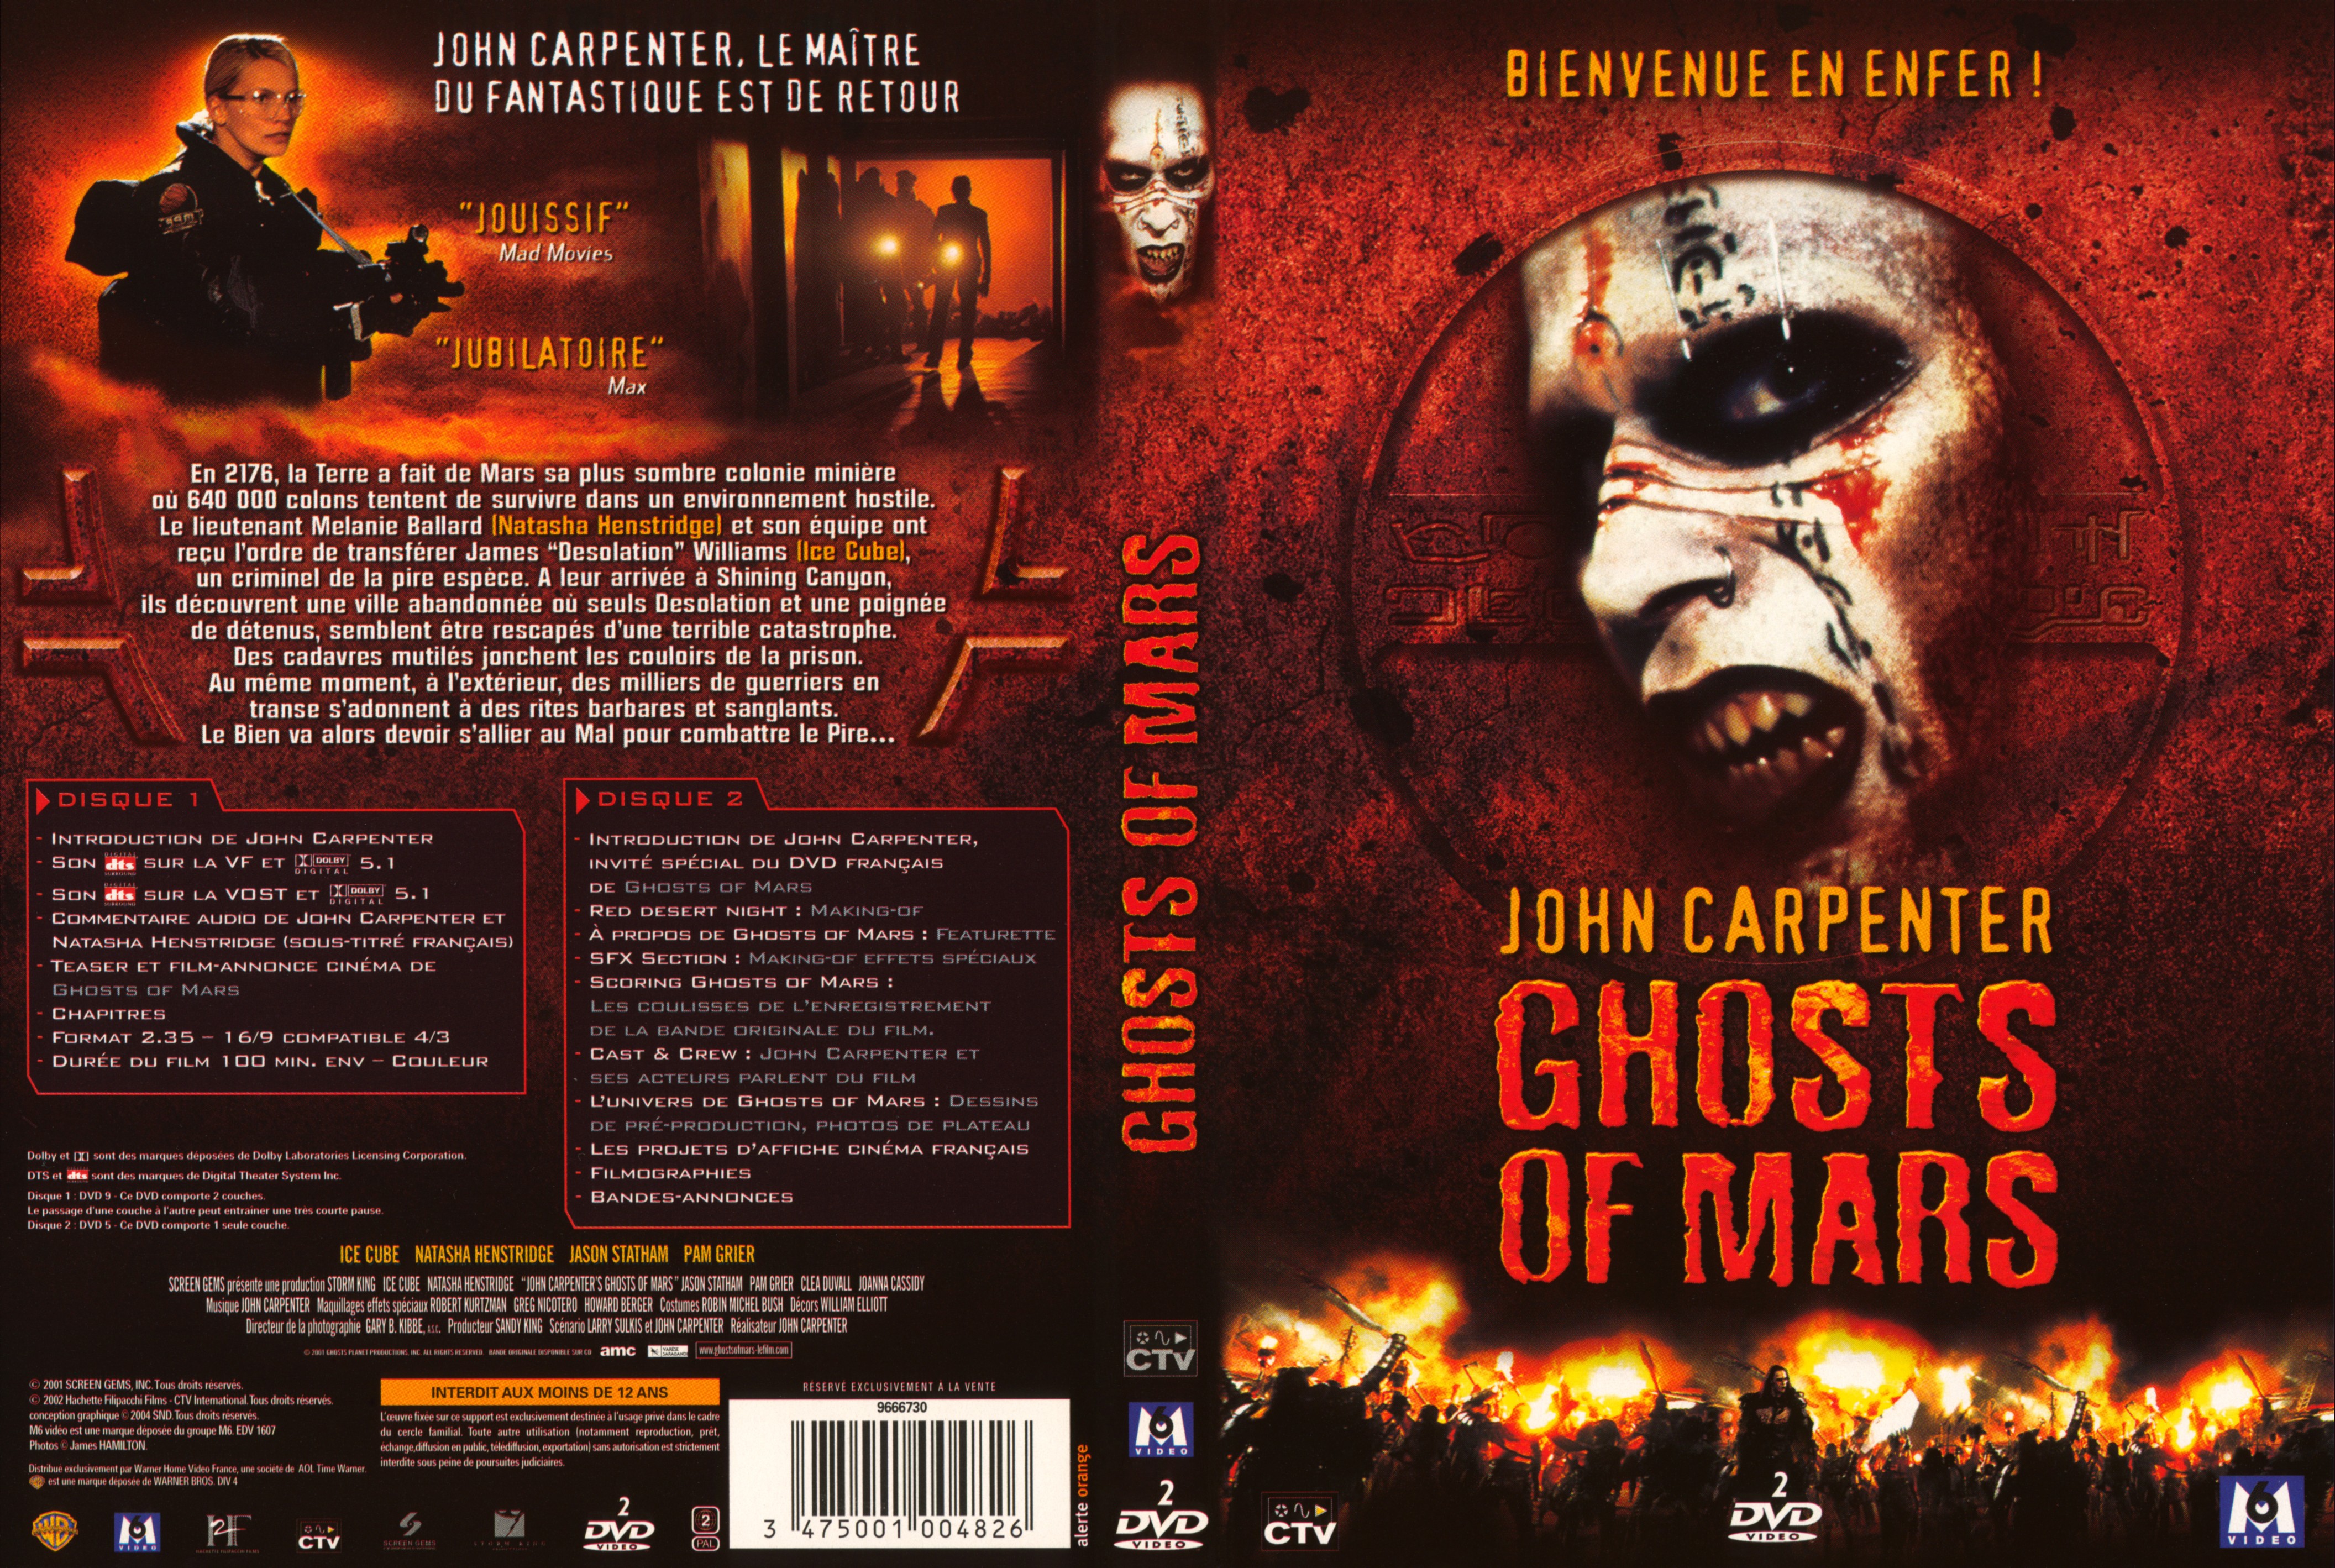 Jaquette DVD Ghosts of Mars v2